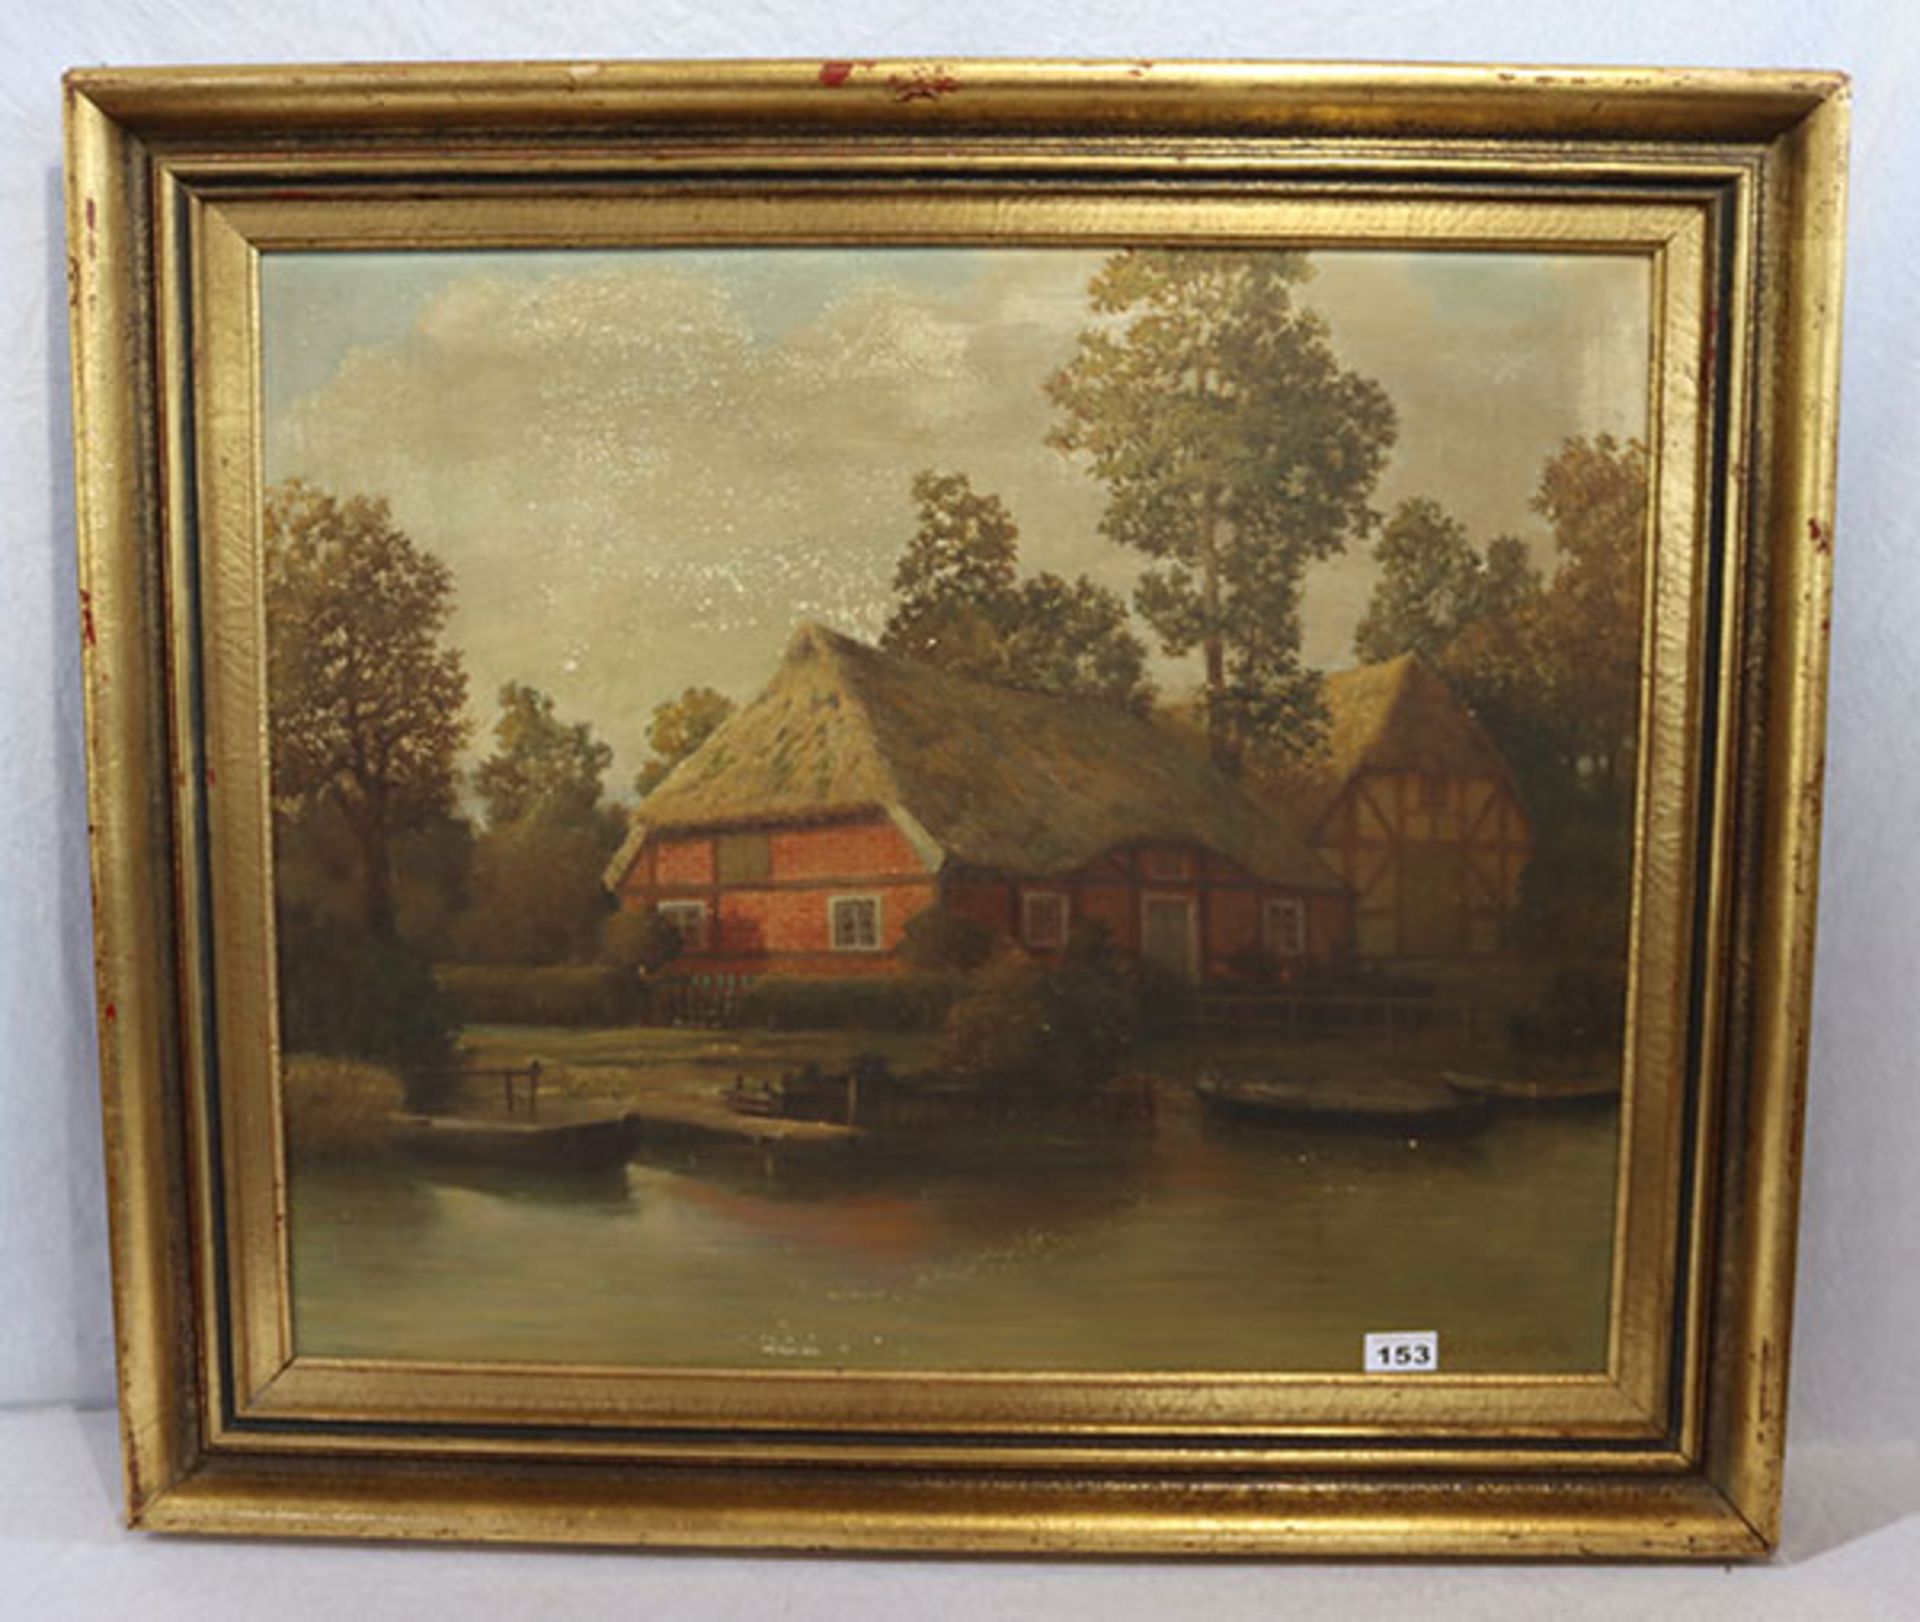 Gemälde ÖL/LW 'Reetdachhaus am Flußlauf', signiert A. Ceriwoll ? 43, Bildoberfläche stark